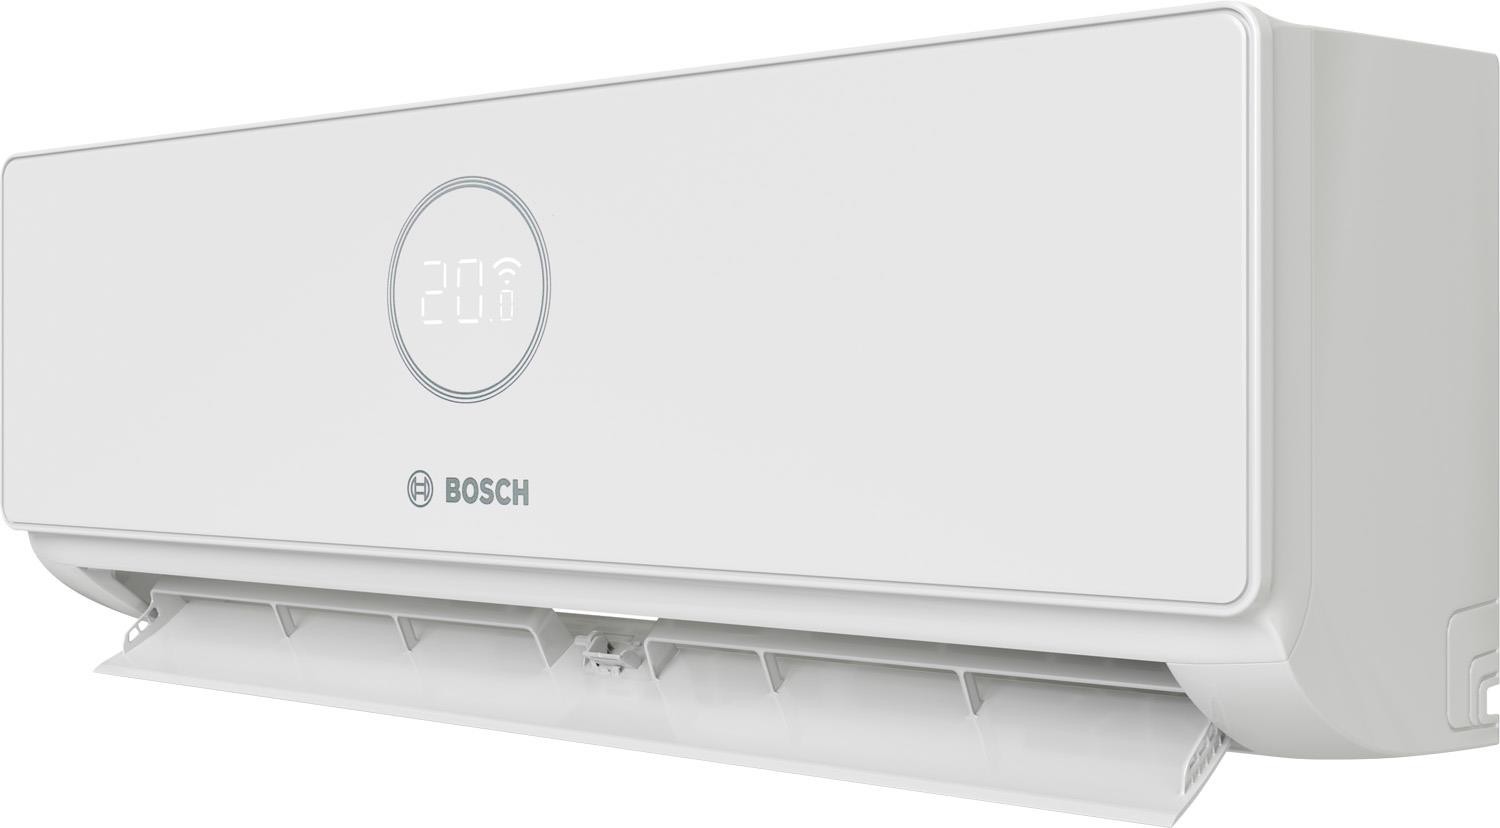 Кондиционер сплит-система Bosch Climate CL3000i 53 E обзор - фото 8